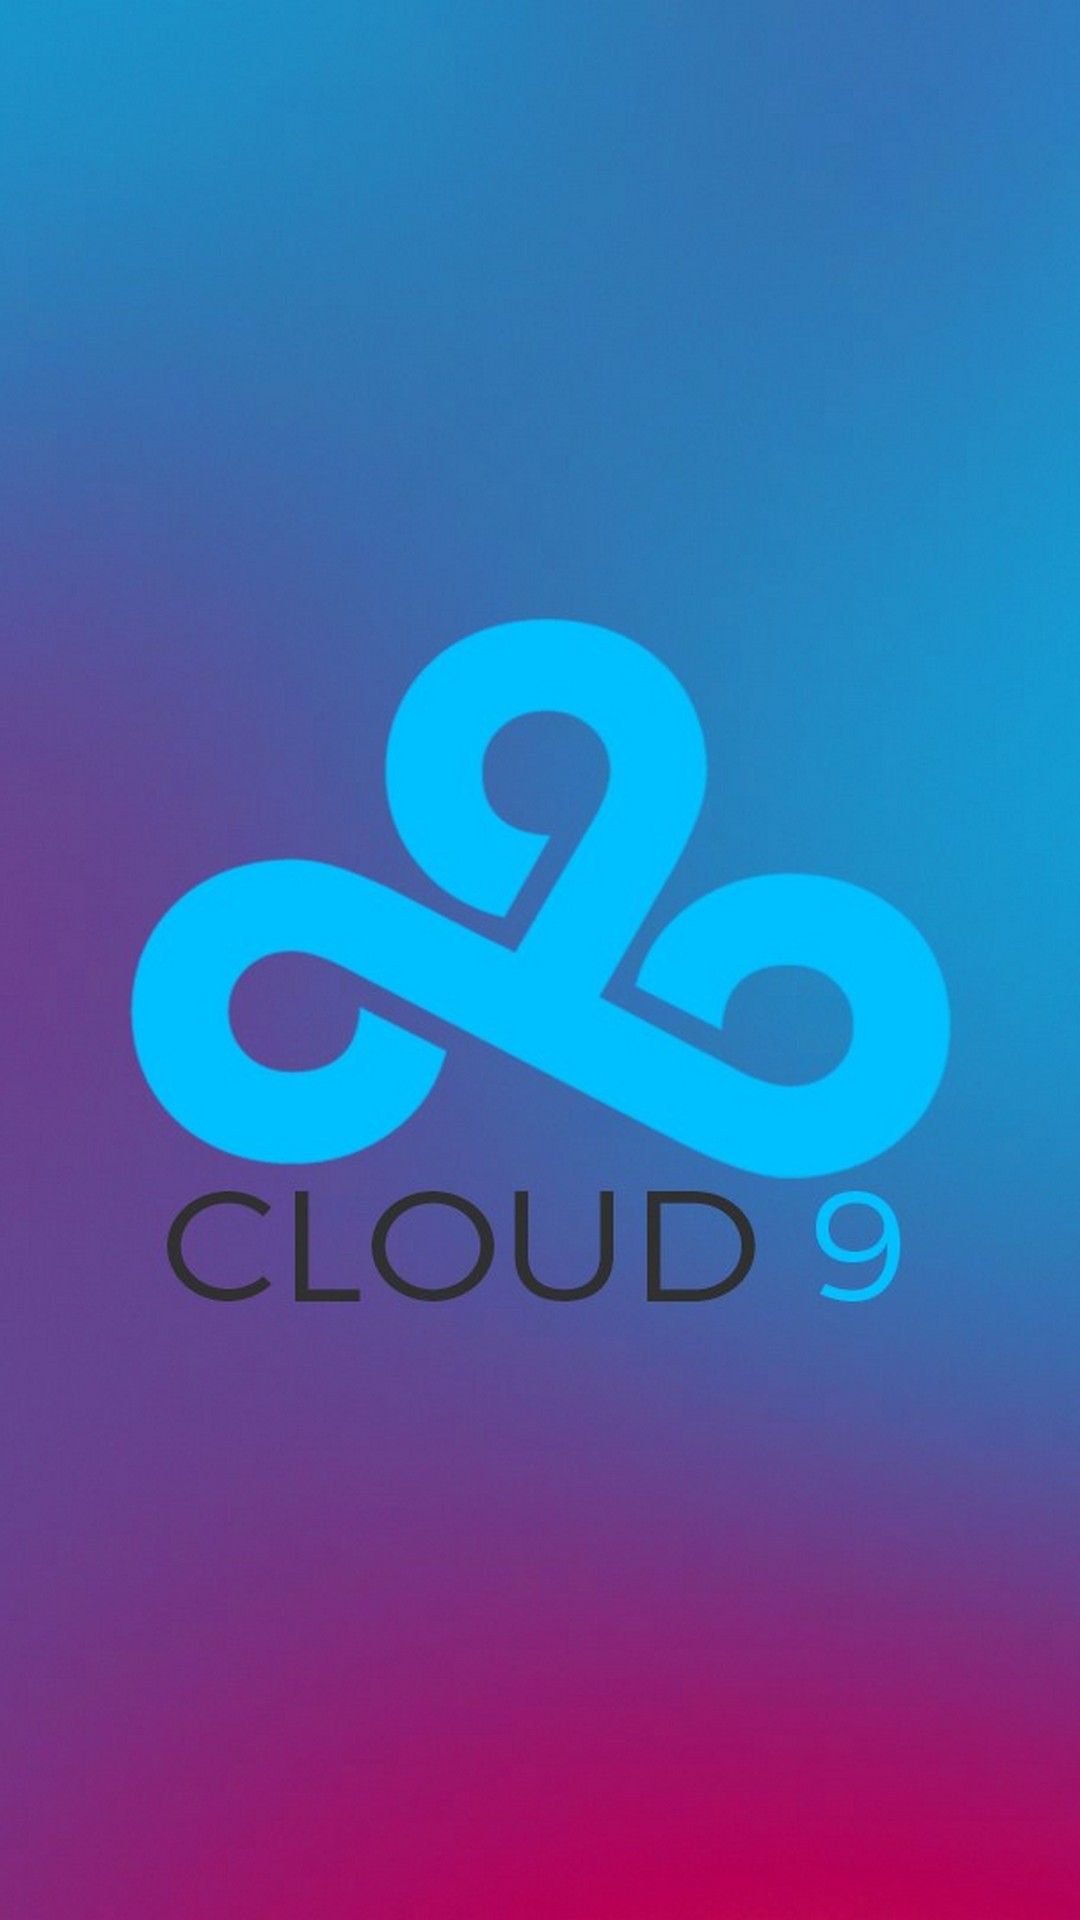 Cloud 9 Lol Wallpapers